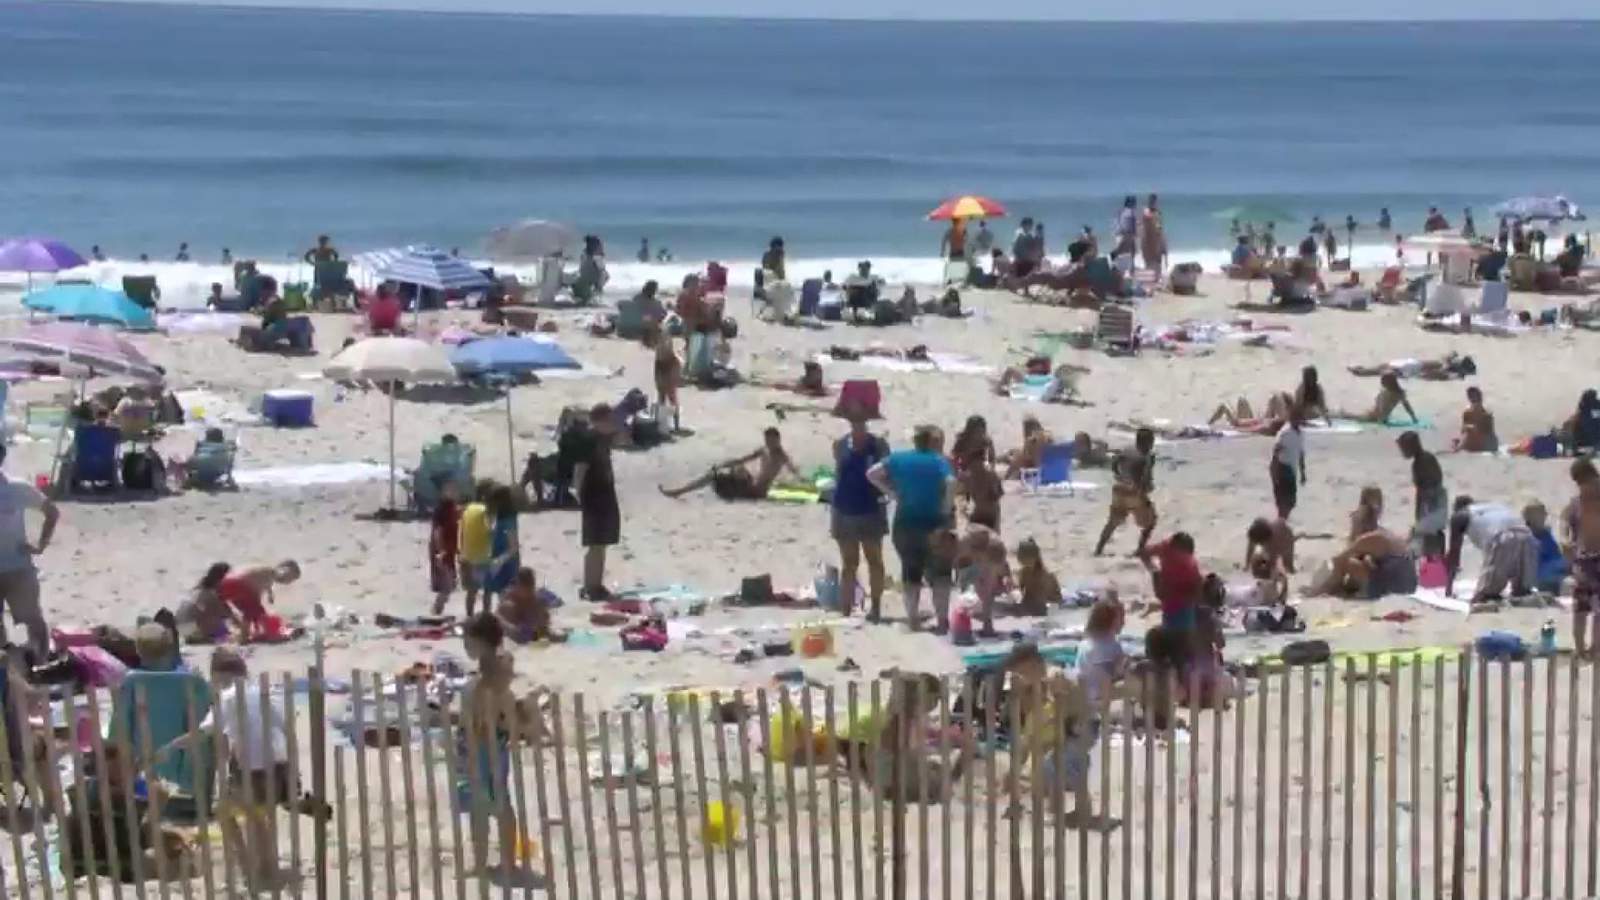 Beachgoers face sand, surf, social distancing